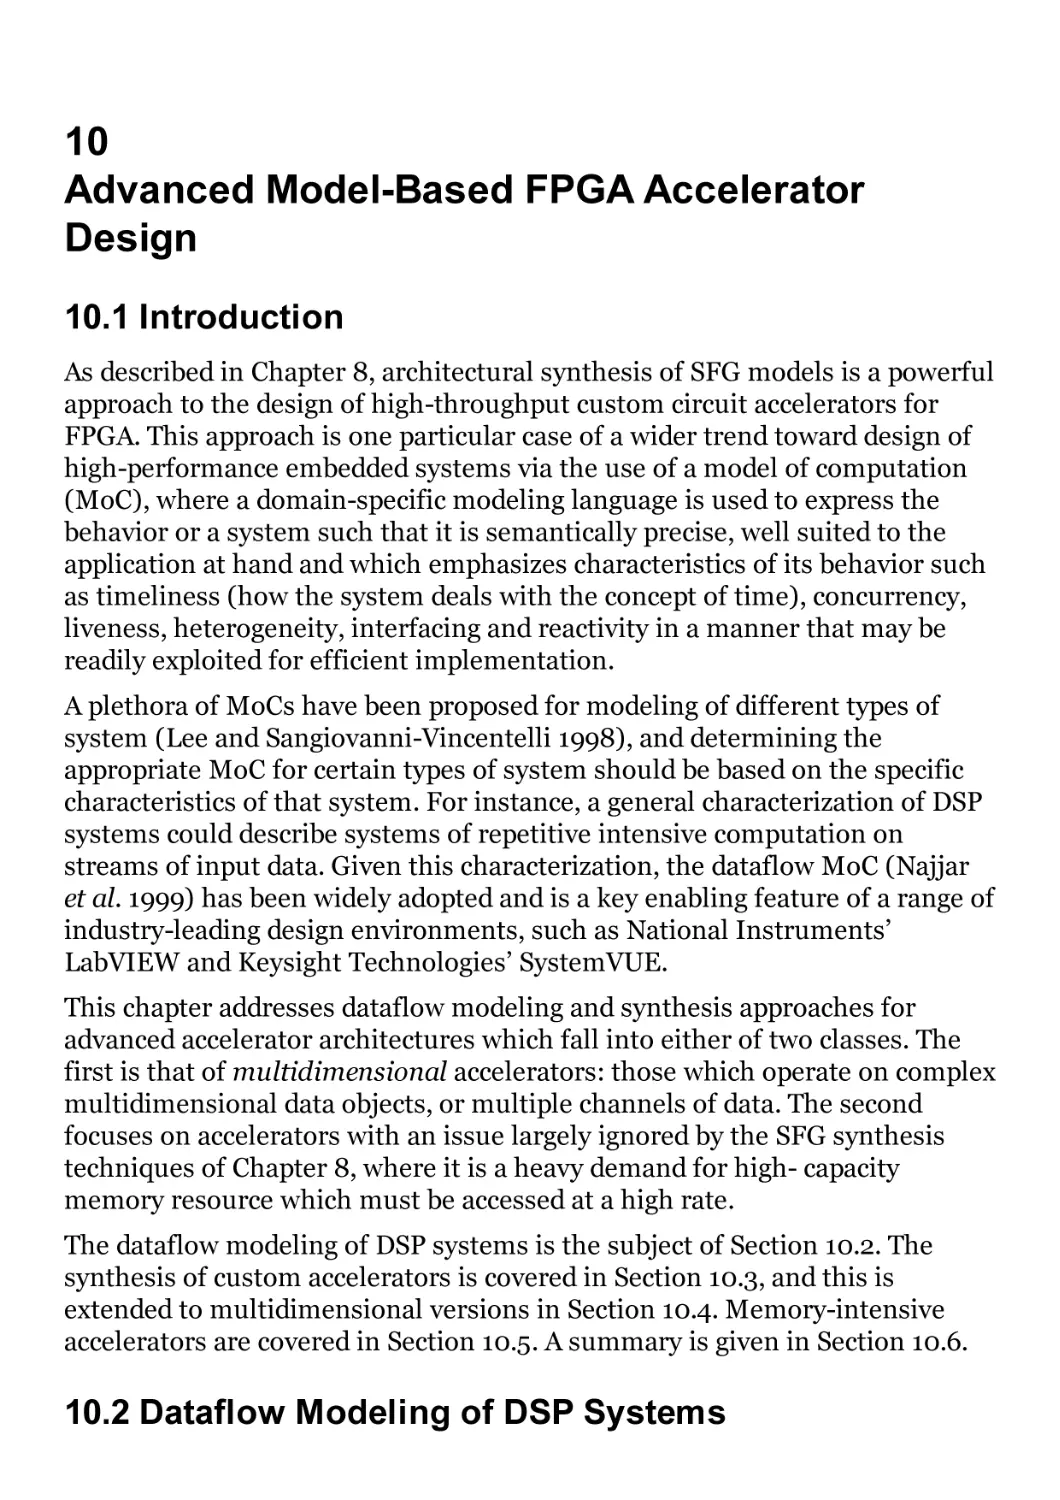 10 Advanced Model-Based FPGA Accelerator Design
10.1 Introduction
10.2 Dataflow Modeling of DSP Systems